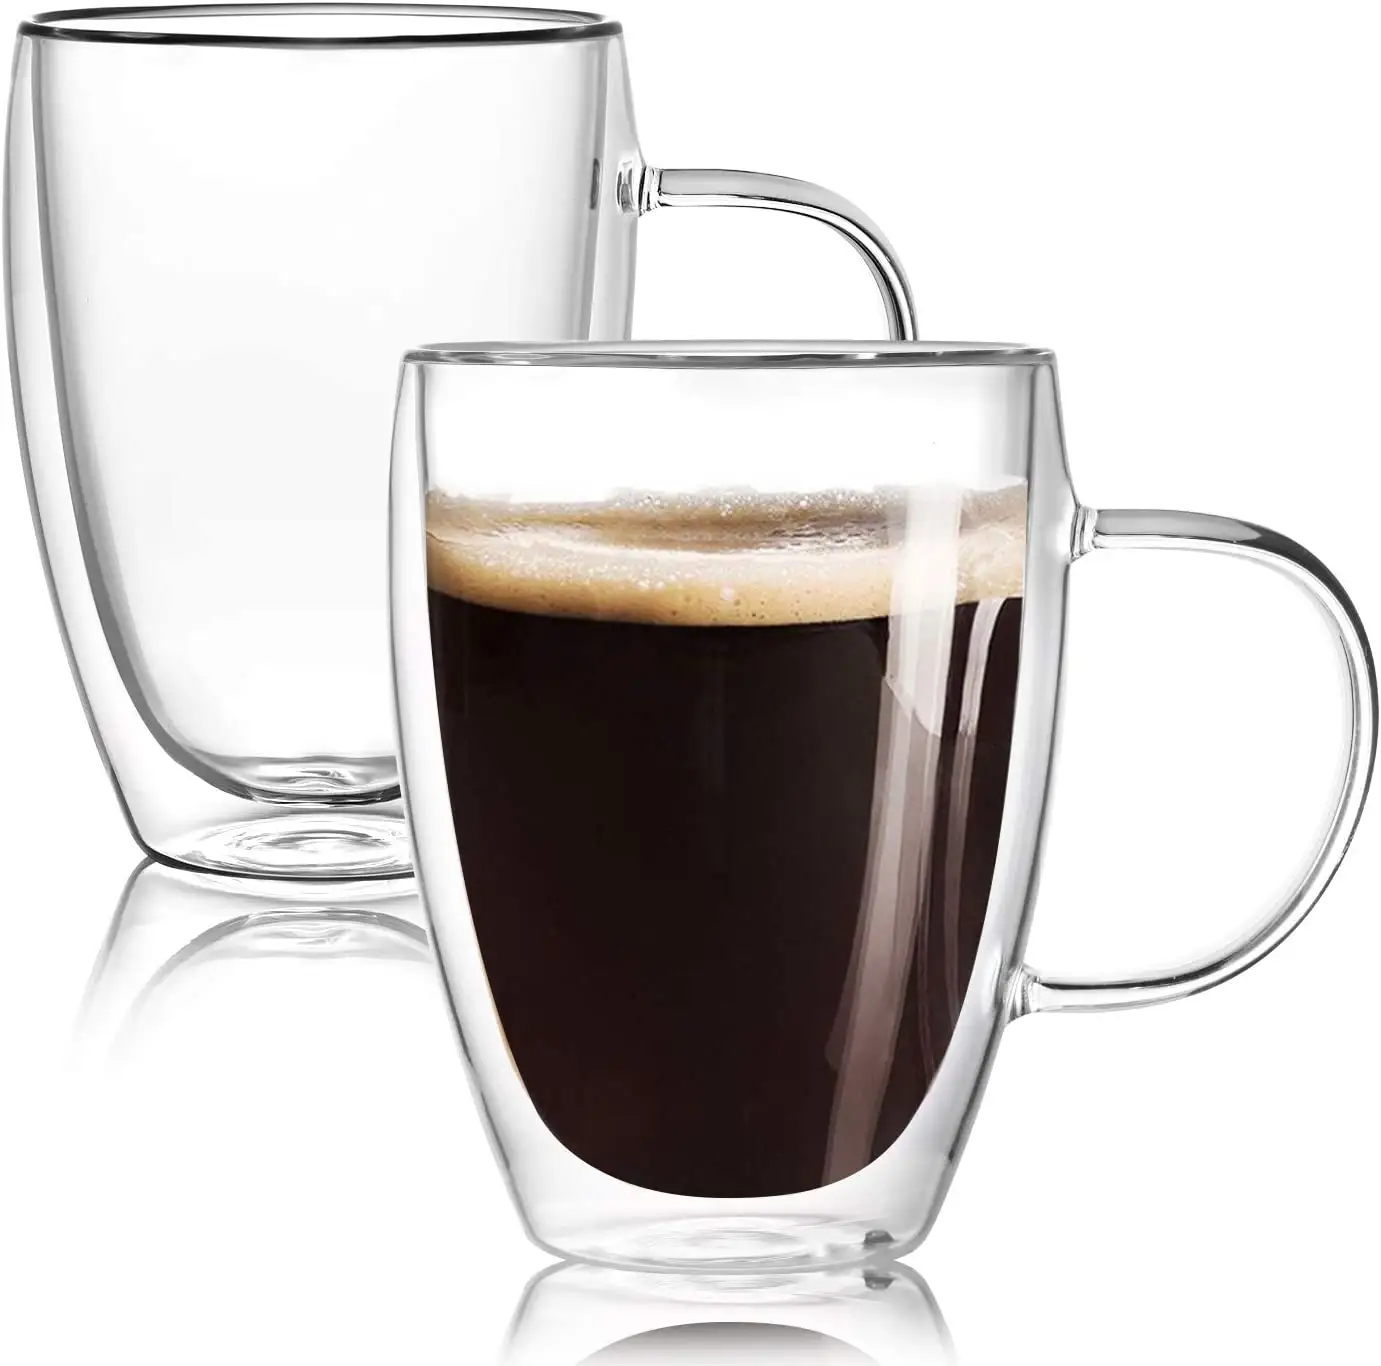 Espresso latte cappuccino thermo glassware coffee mug double wall glass cups pyrex mugs